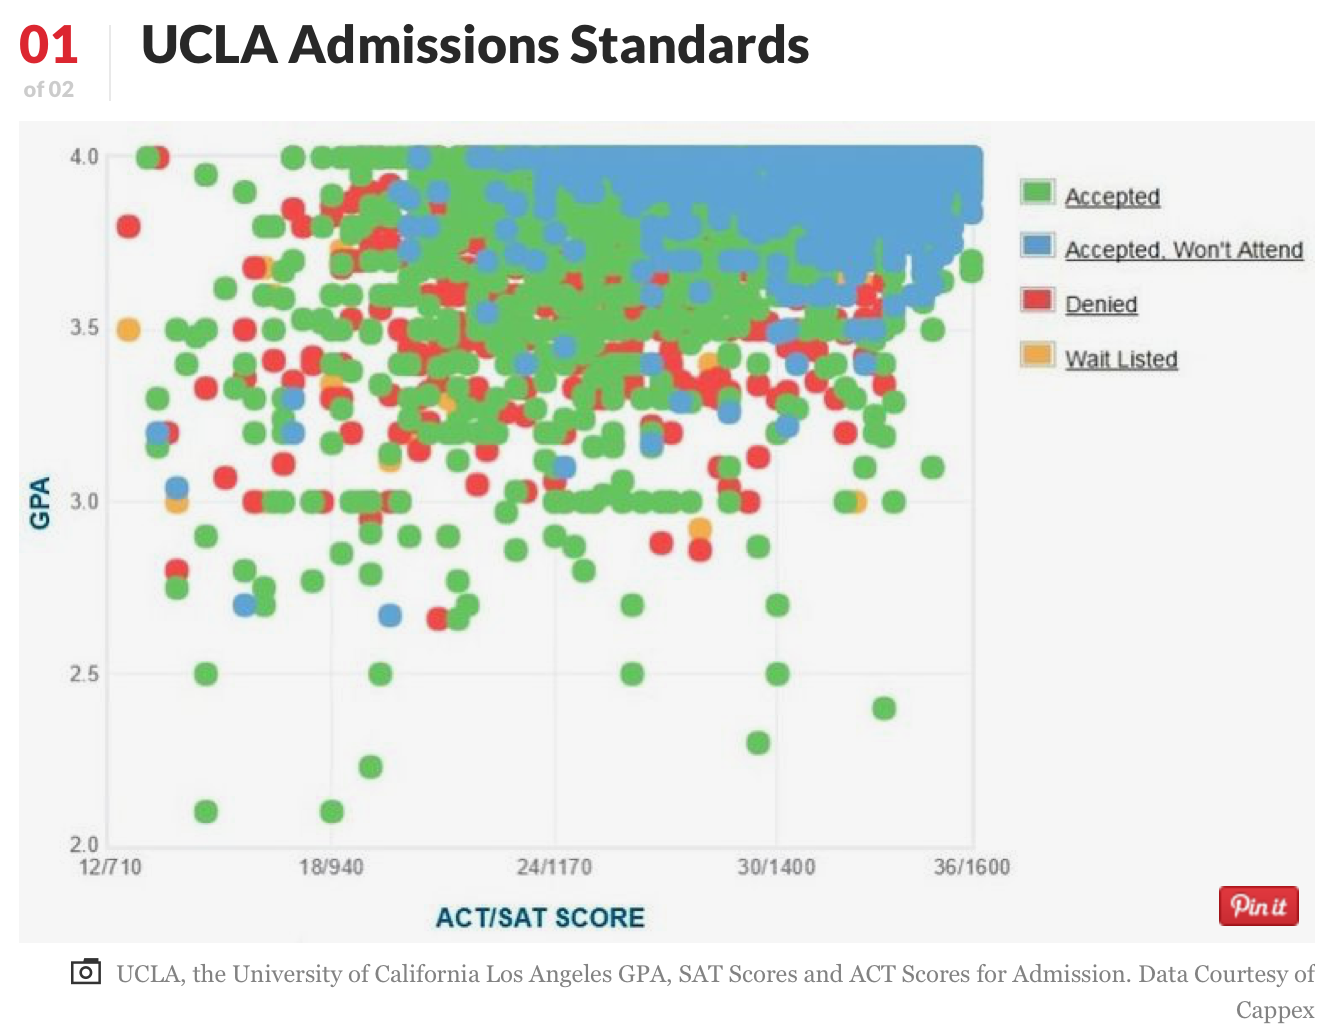 UCLA 洛杉磯加大 - 莘莘學子夢寐以求的大學